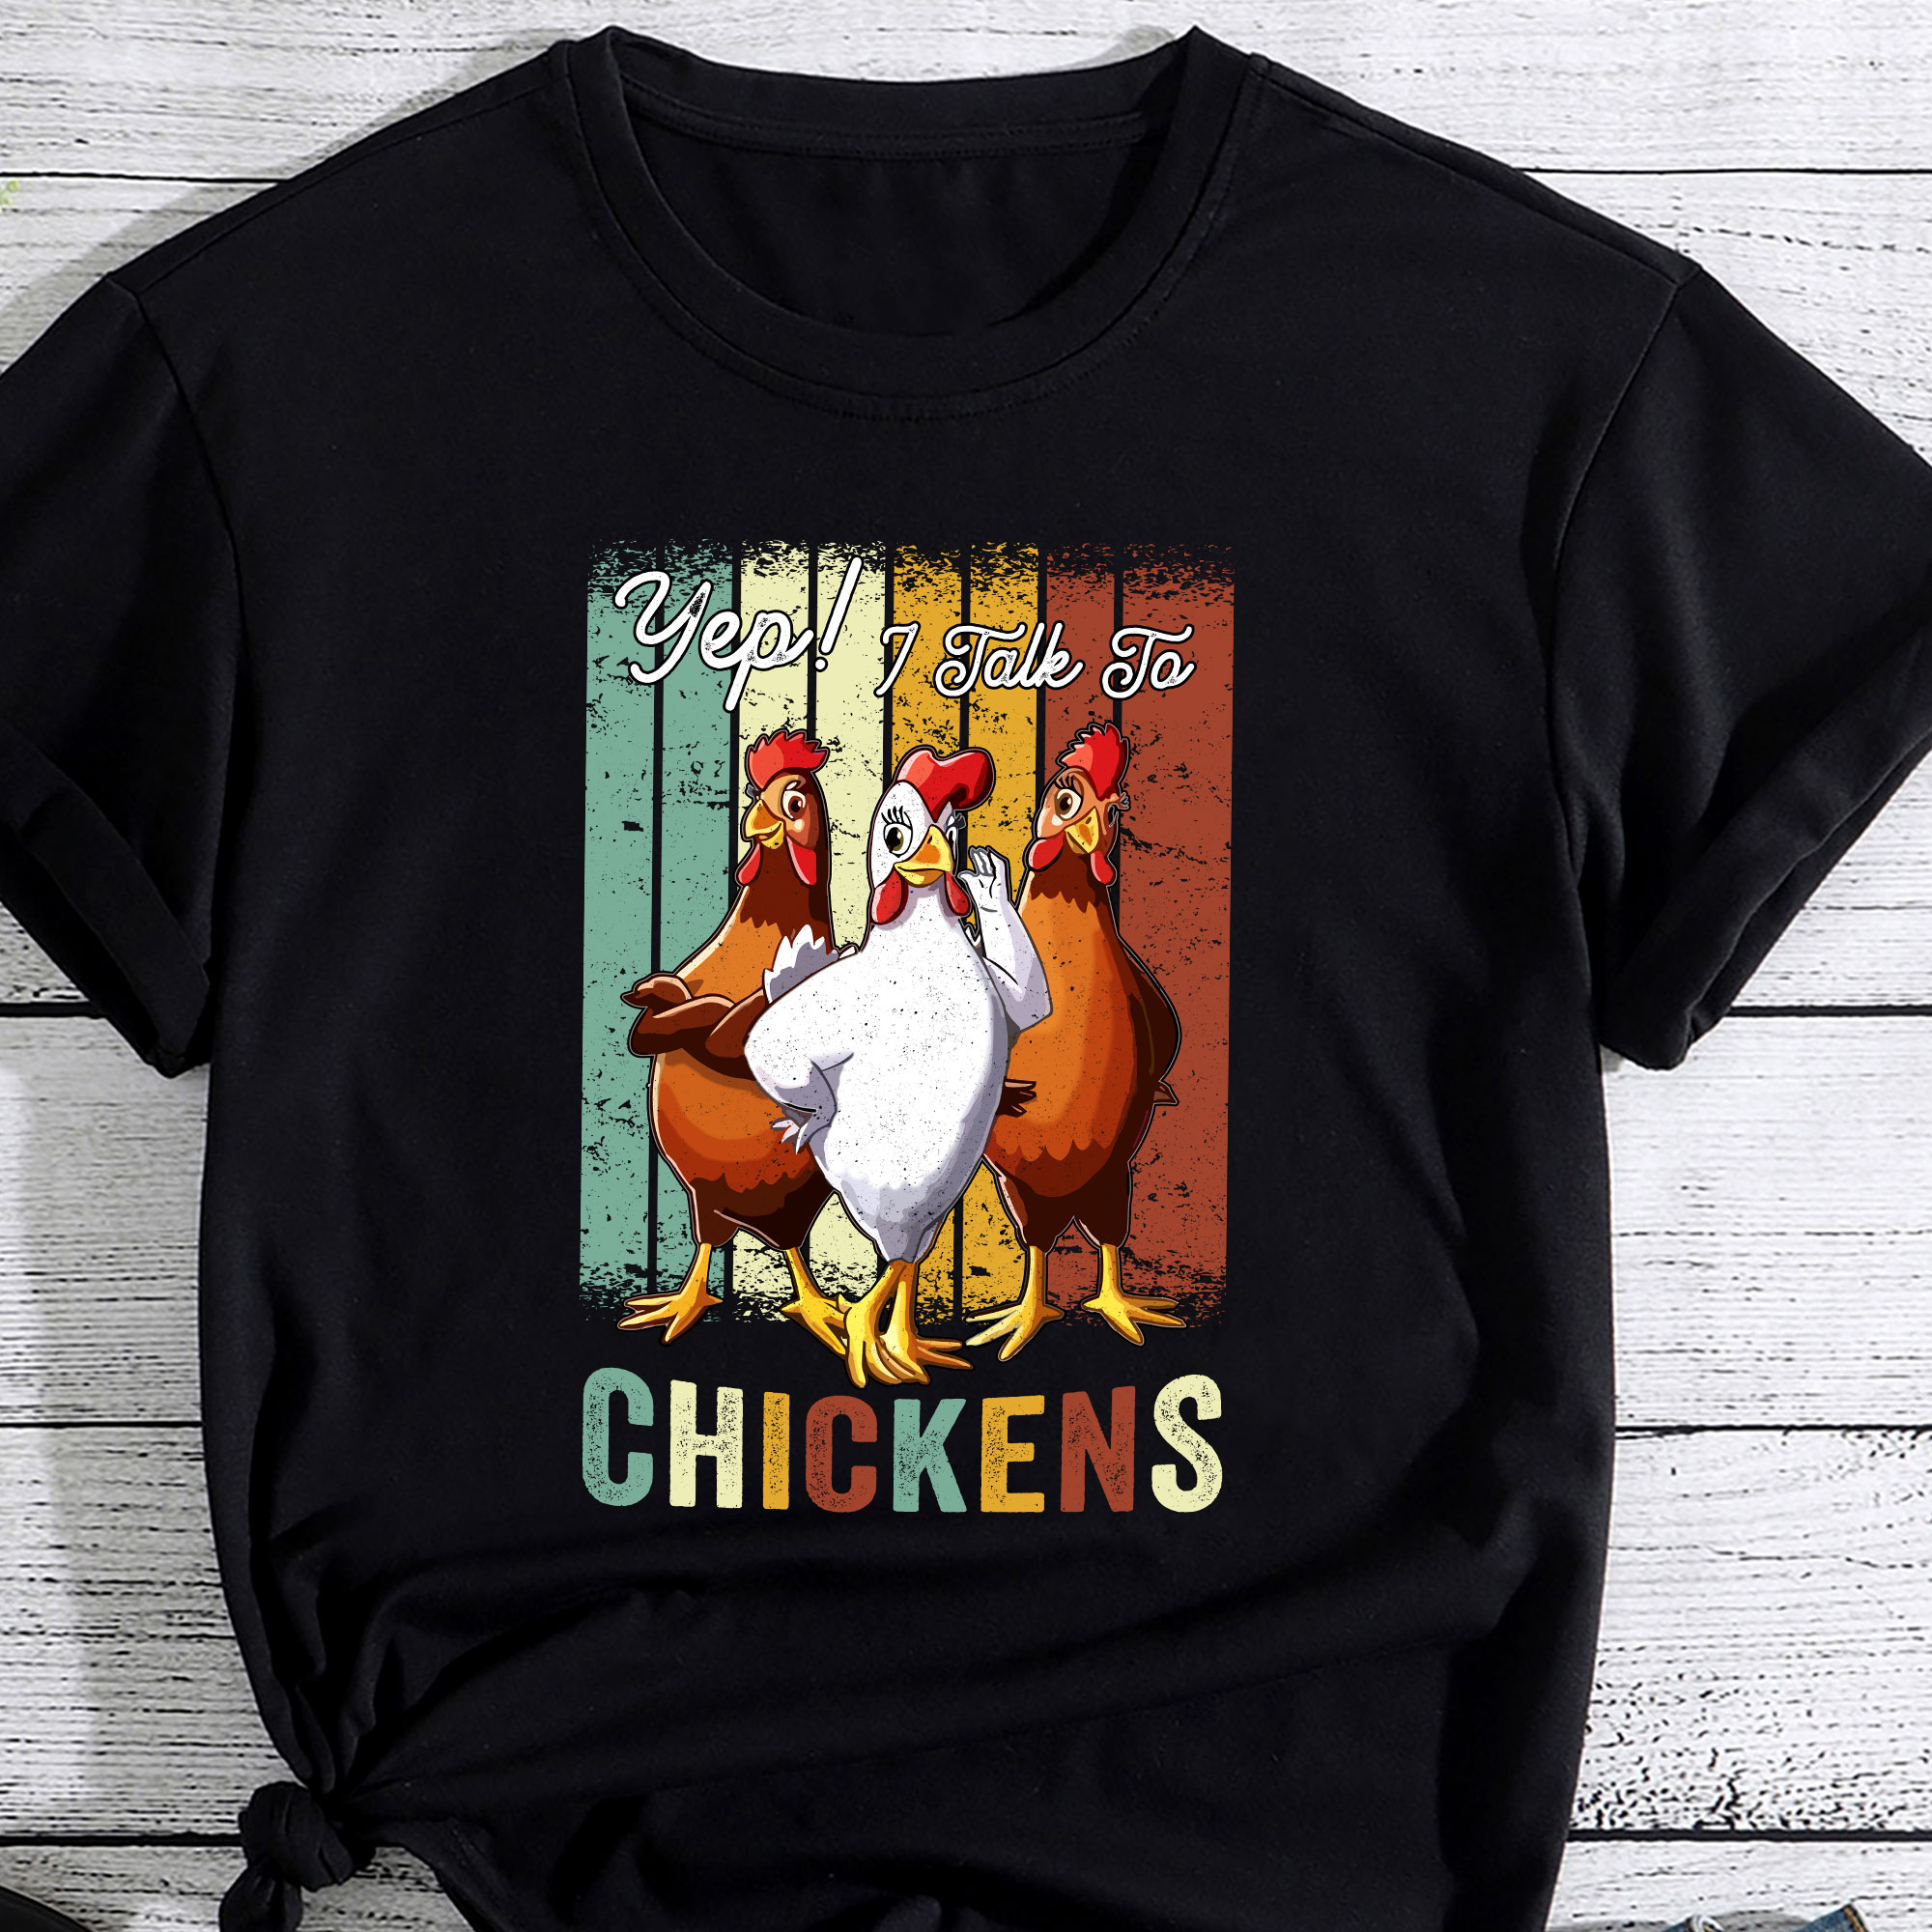 Yep I Talk To Chickens Funny Cute T-Shirt PC 1 - Buy t-shirt designs